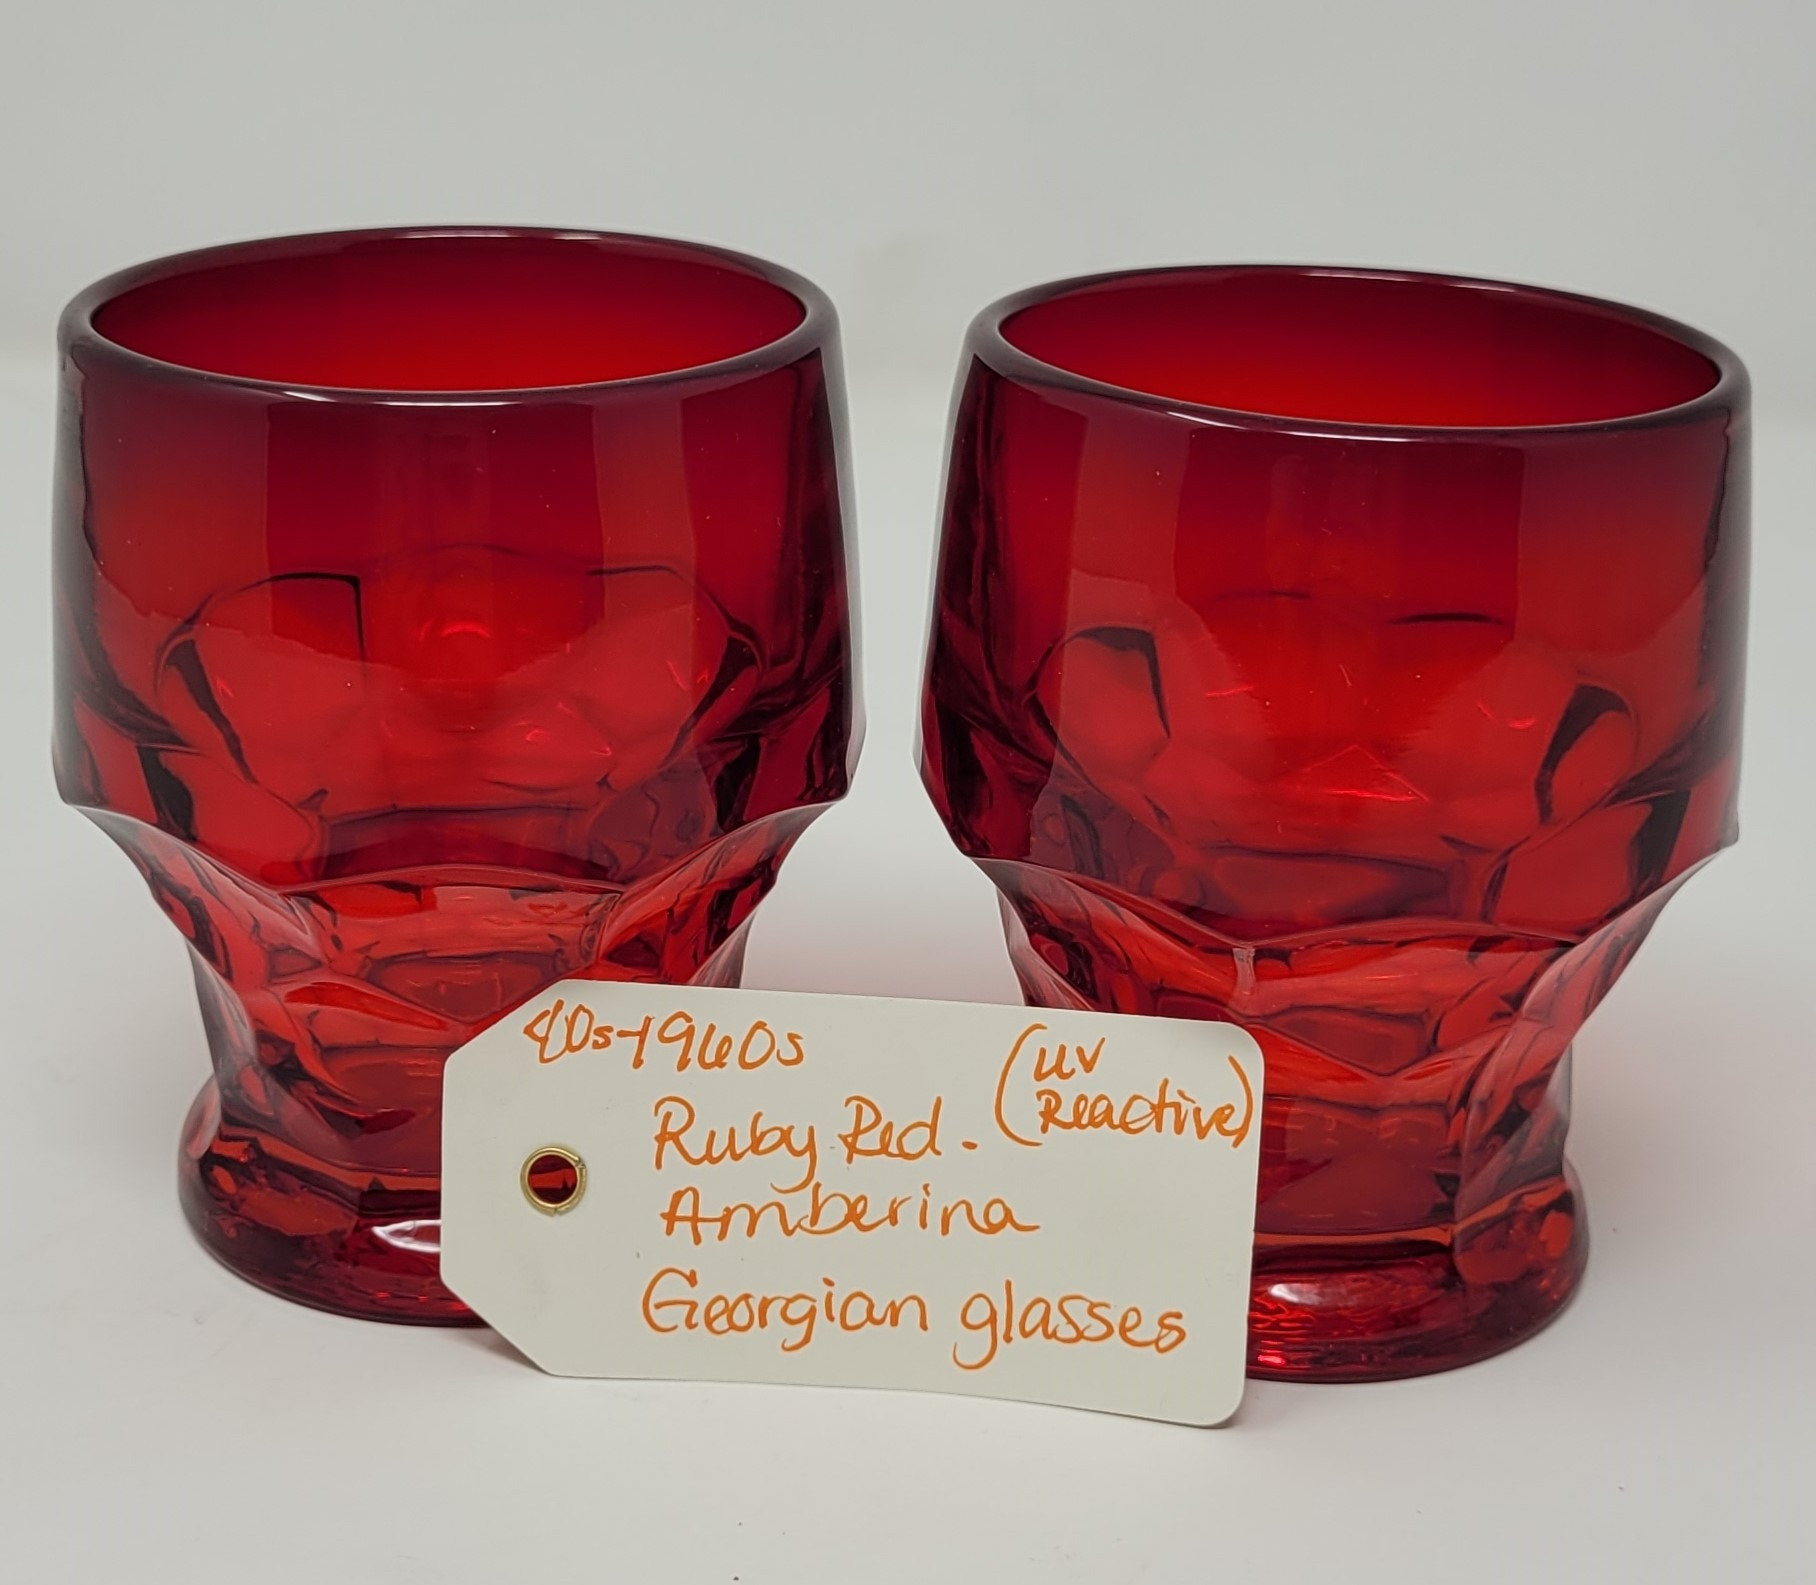 1960's Ruby Red Amberina Georgian Glasses (uv reactive)